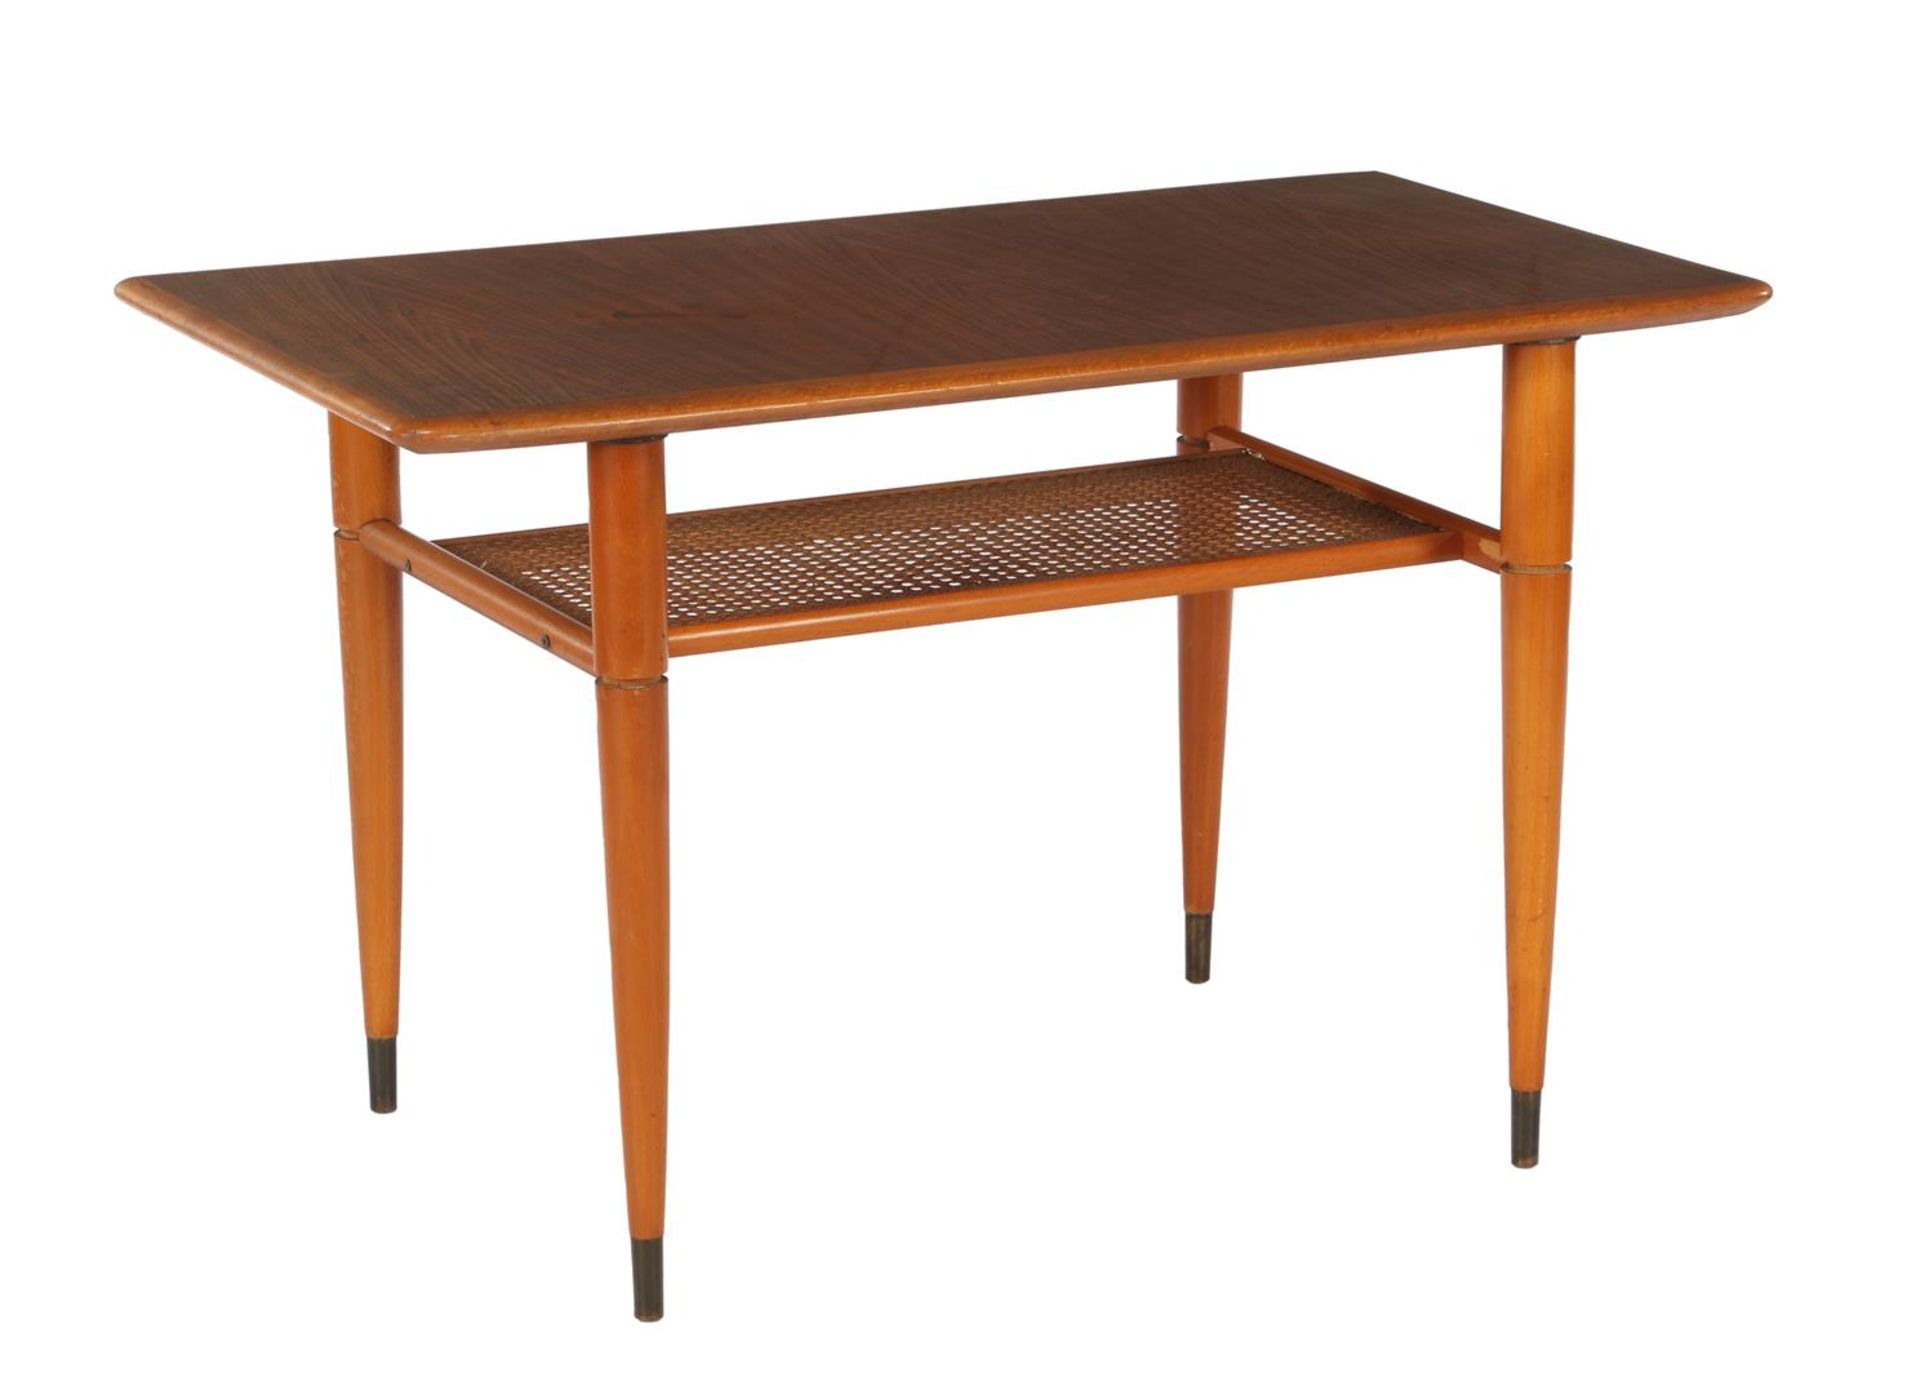 Teak with beech wood & nbsp; table with webbing underlay, 1970s, 54.5 cm high, top 90 x 50 cm